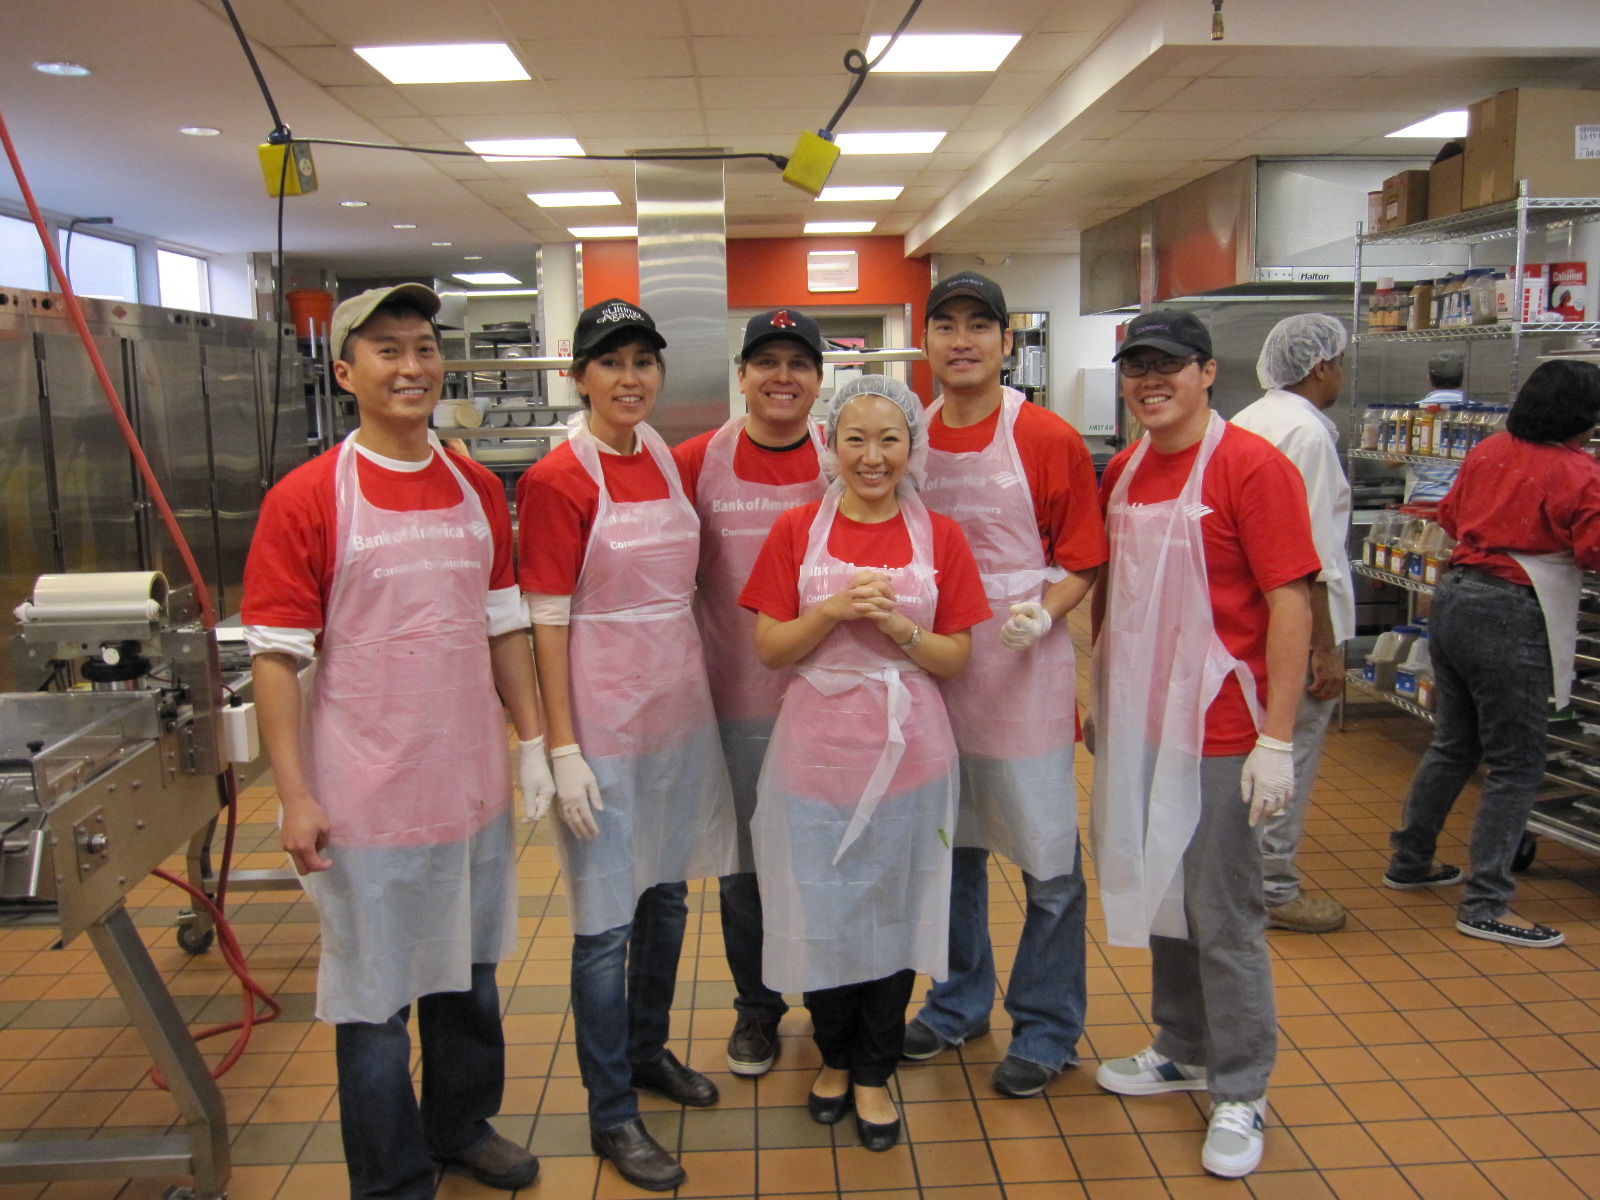 Volunteer Team Bank of America in Kitchen